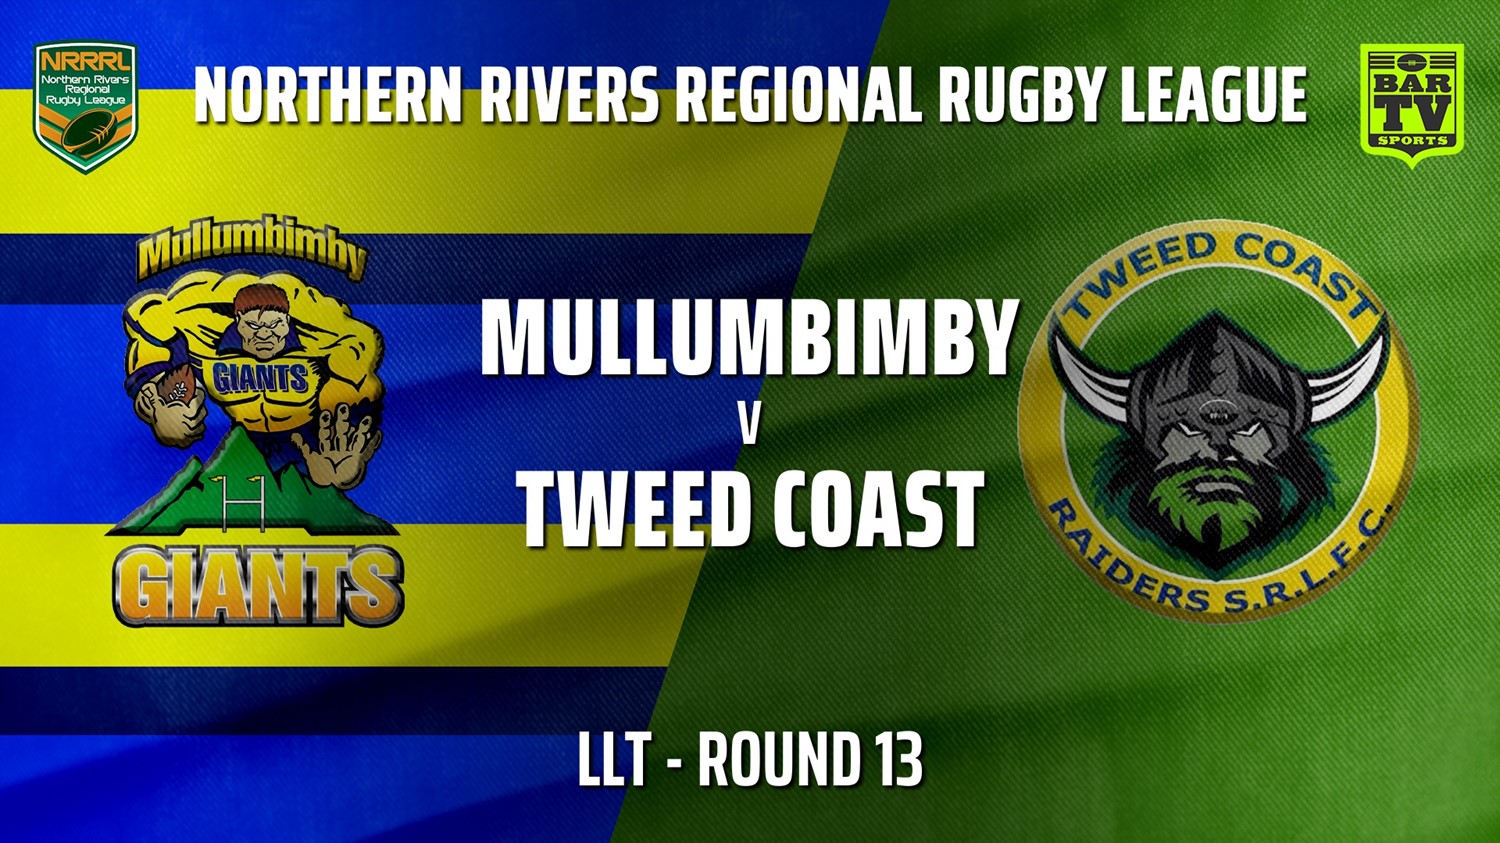 210801-Northern Rivers Round 13 - LLT - Mullumbimby Giants v Tweed Coast Raiders Slate Image